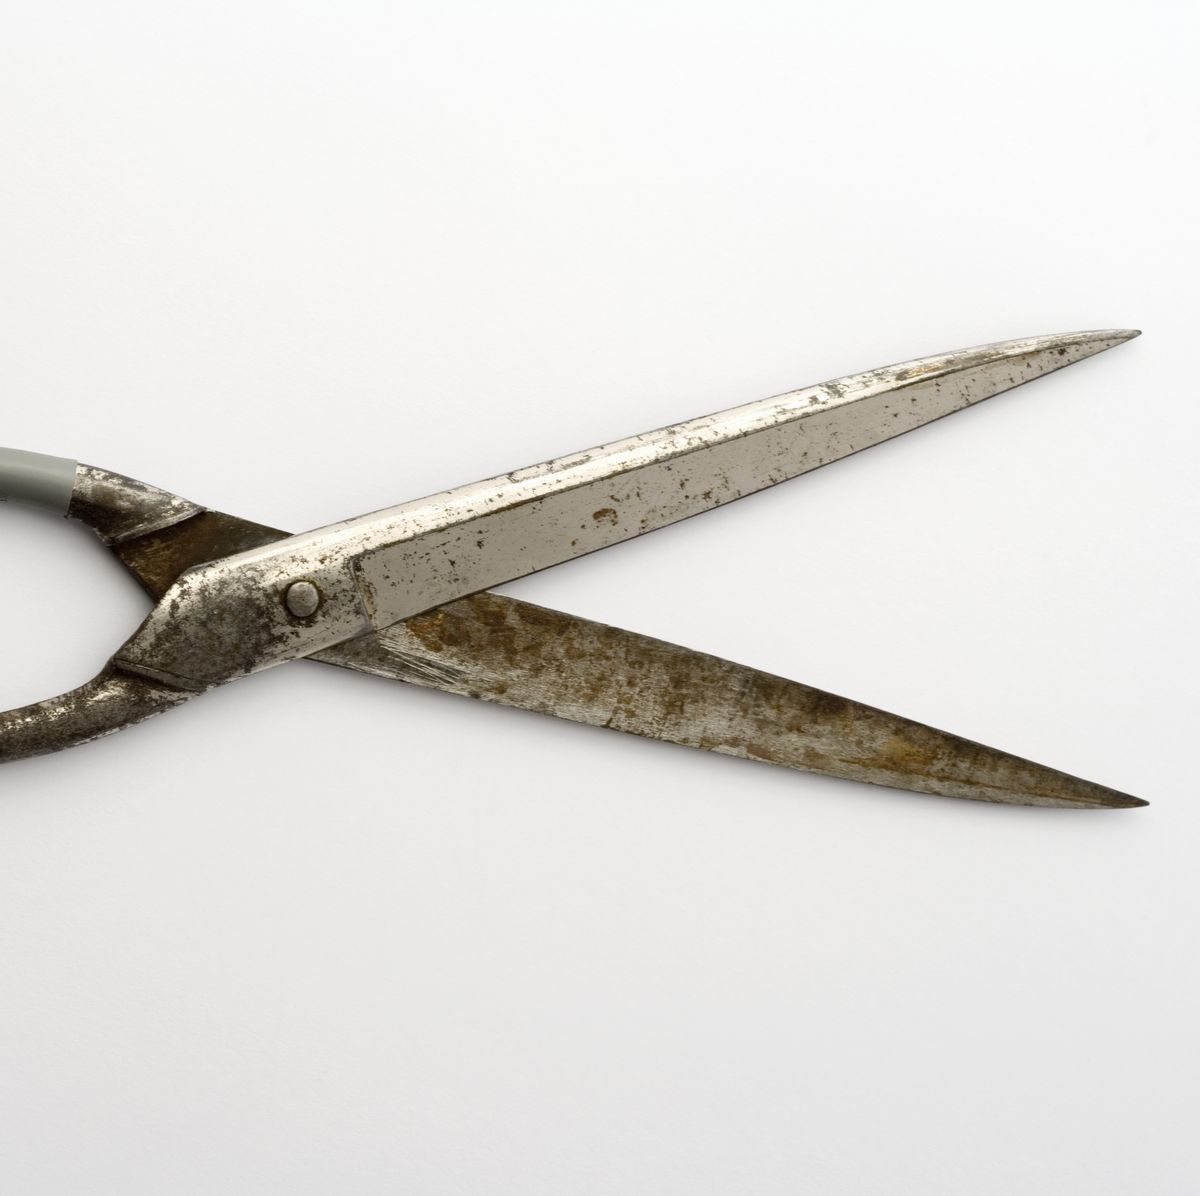 How to Sharpen Scissors | 4 Tips for a Sharp Pair of Scissors